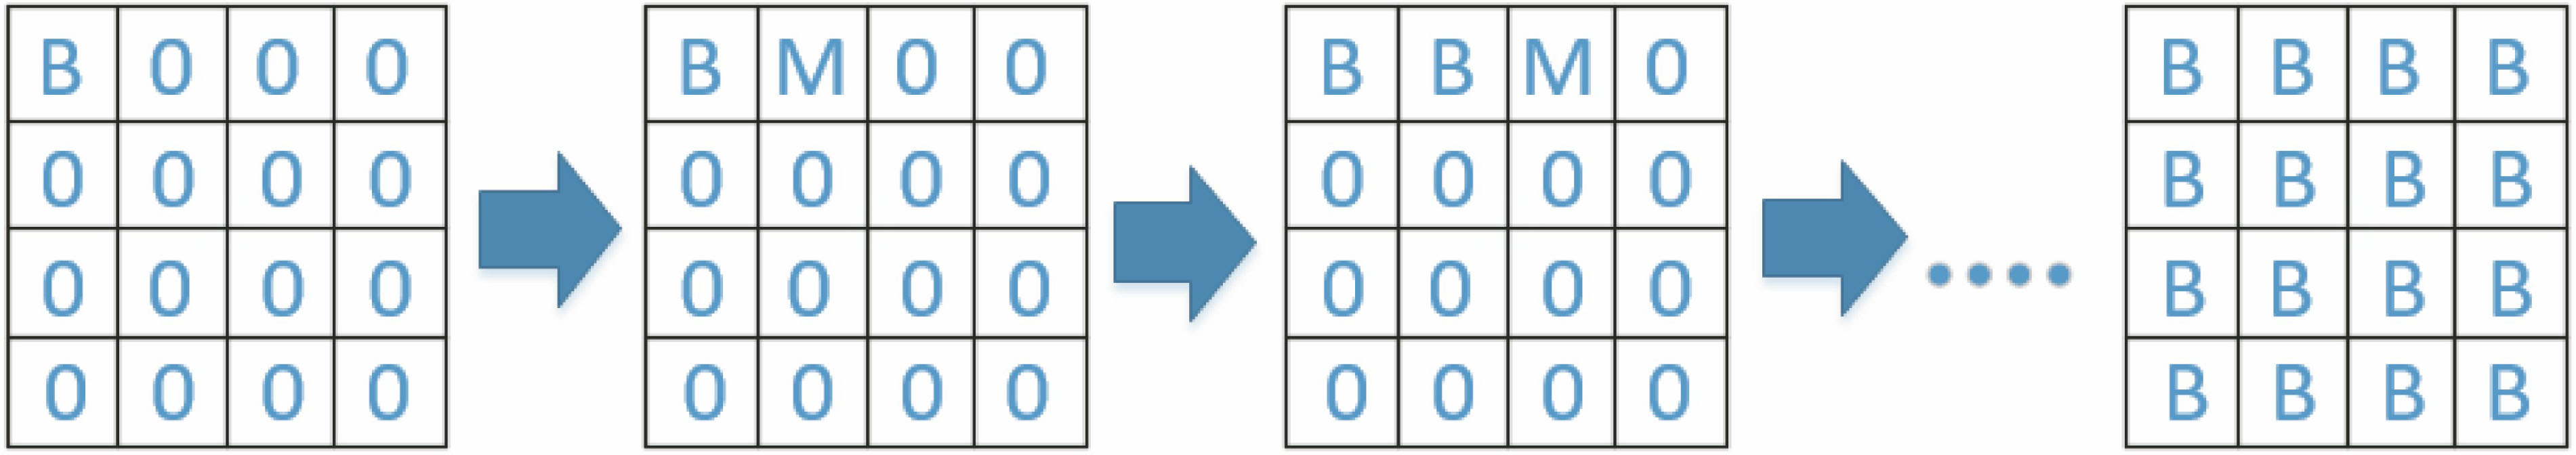 Flow chart of unit phase modulation using continuous sequential algorithm. M represents segment under modulating, O represents segment without phase modulation, and B represents segment after optimization